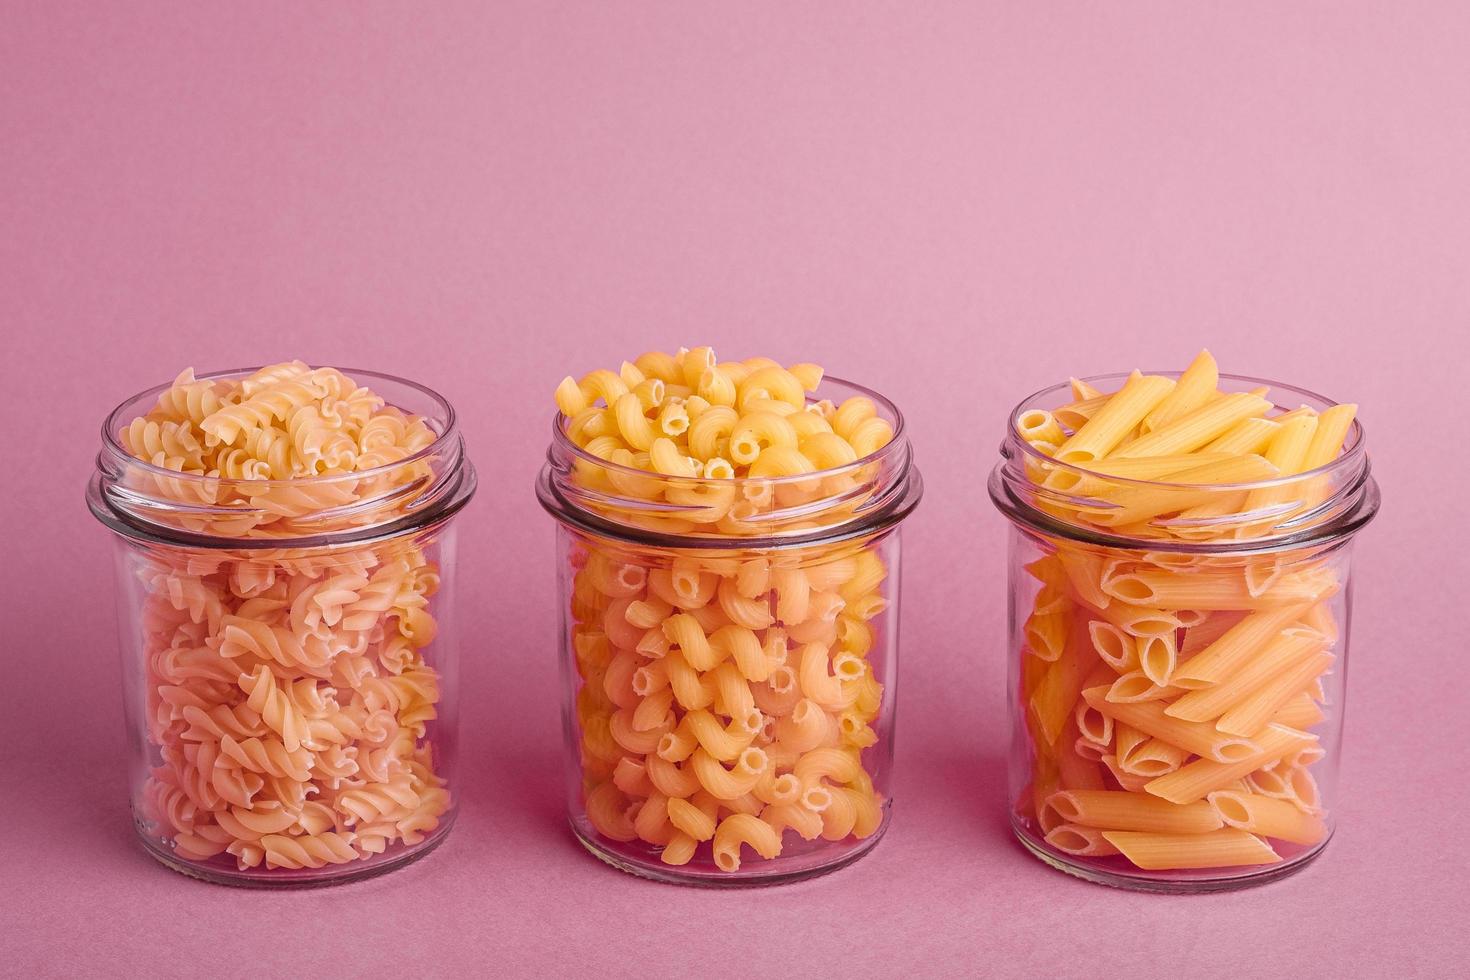 Variety of uncooked golden wheat pasta on minimal pink background photo